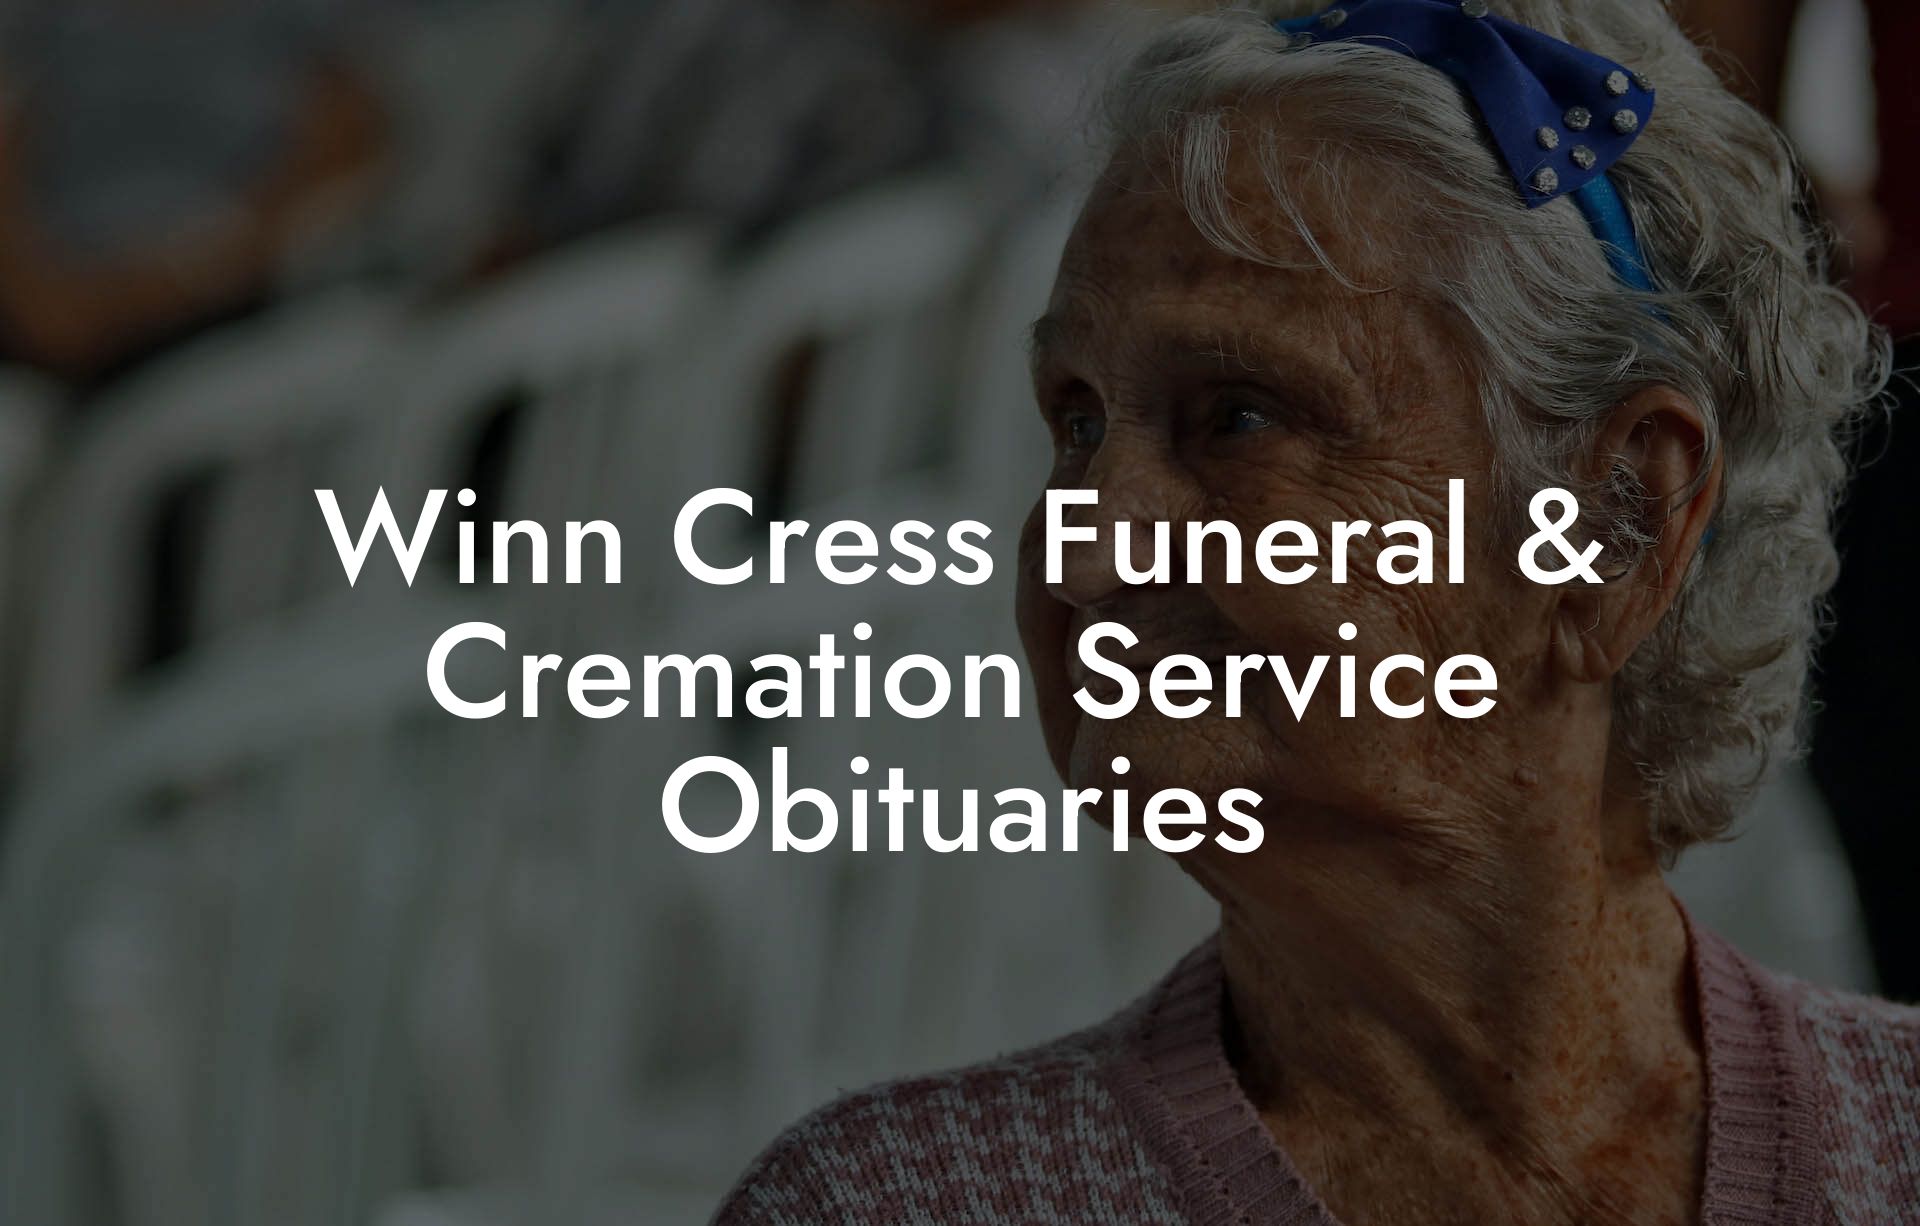 Winn Cress Funeral & Cremation Service Obituaries